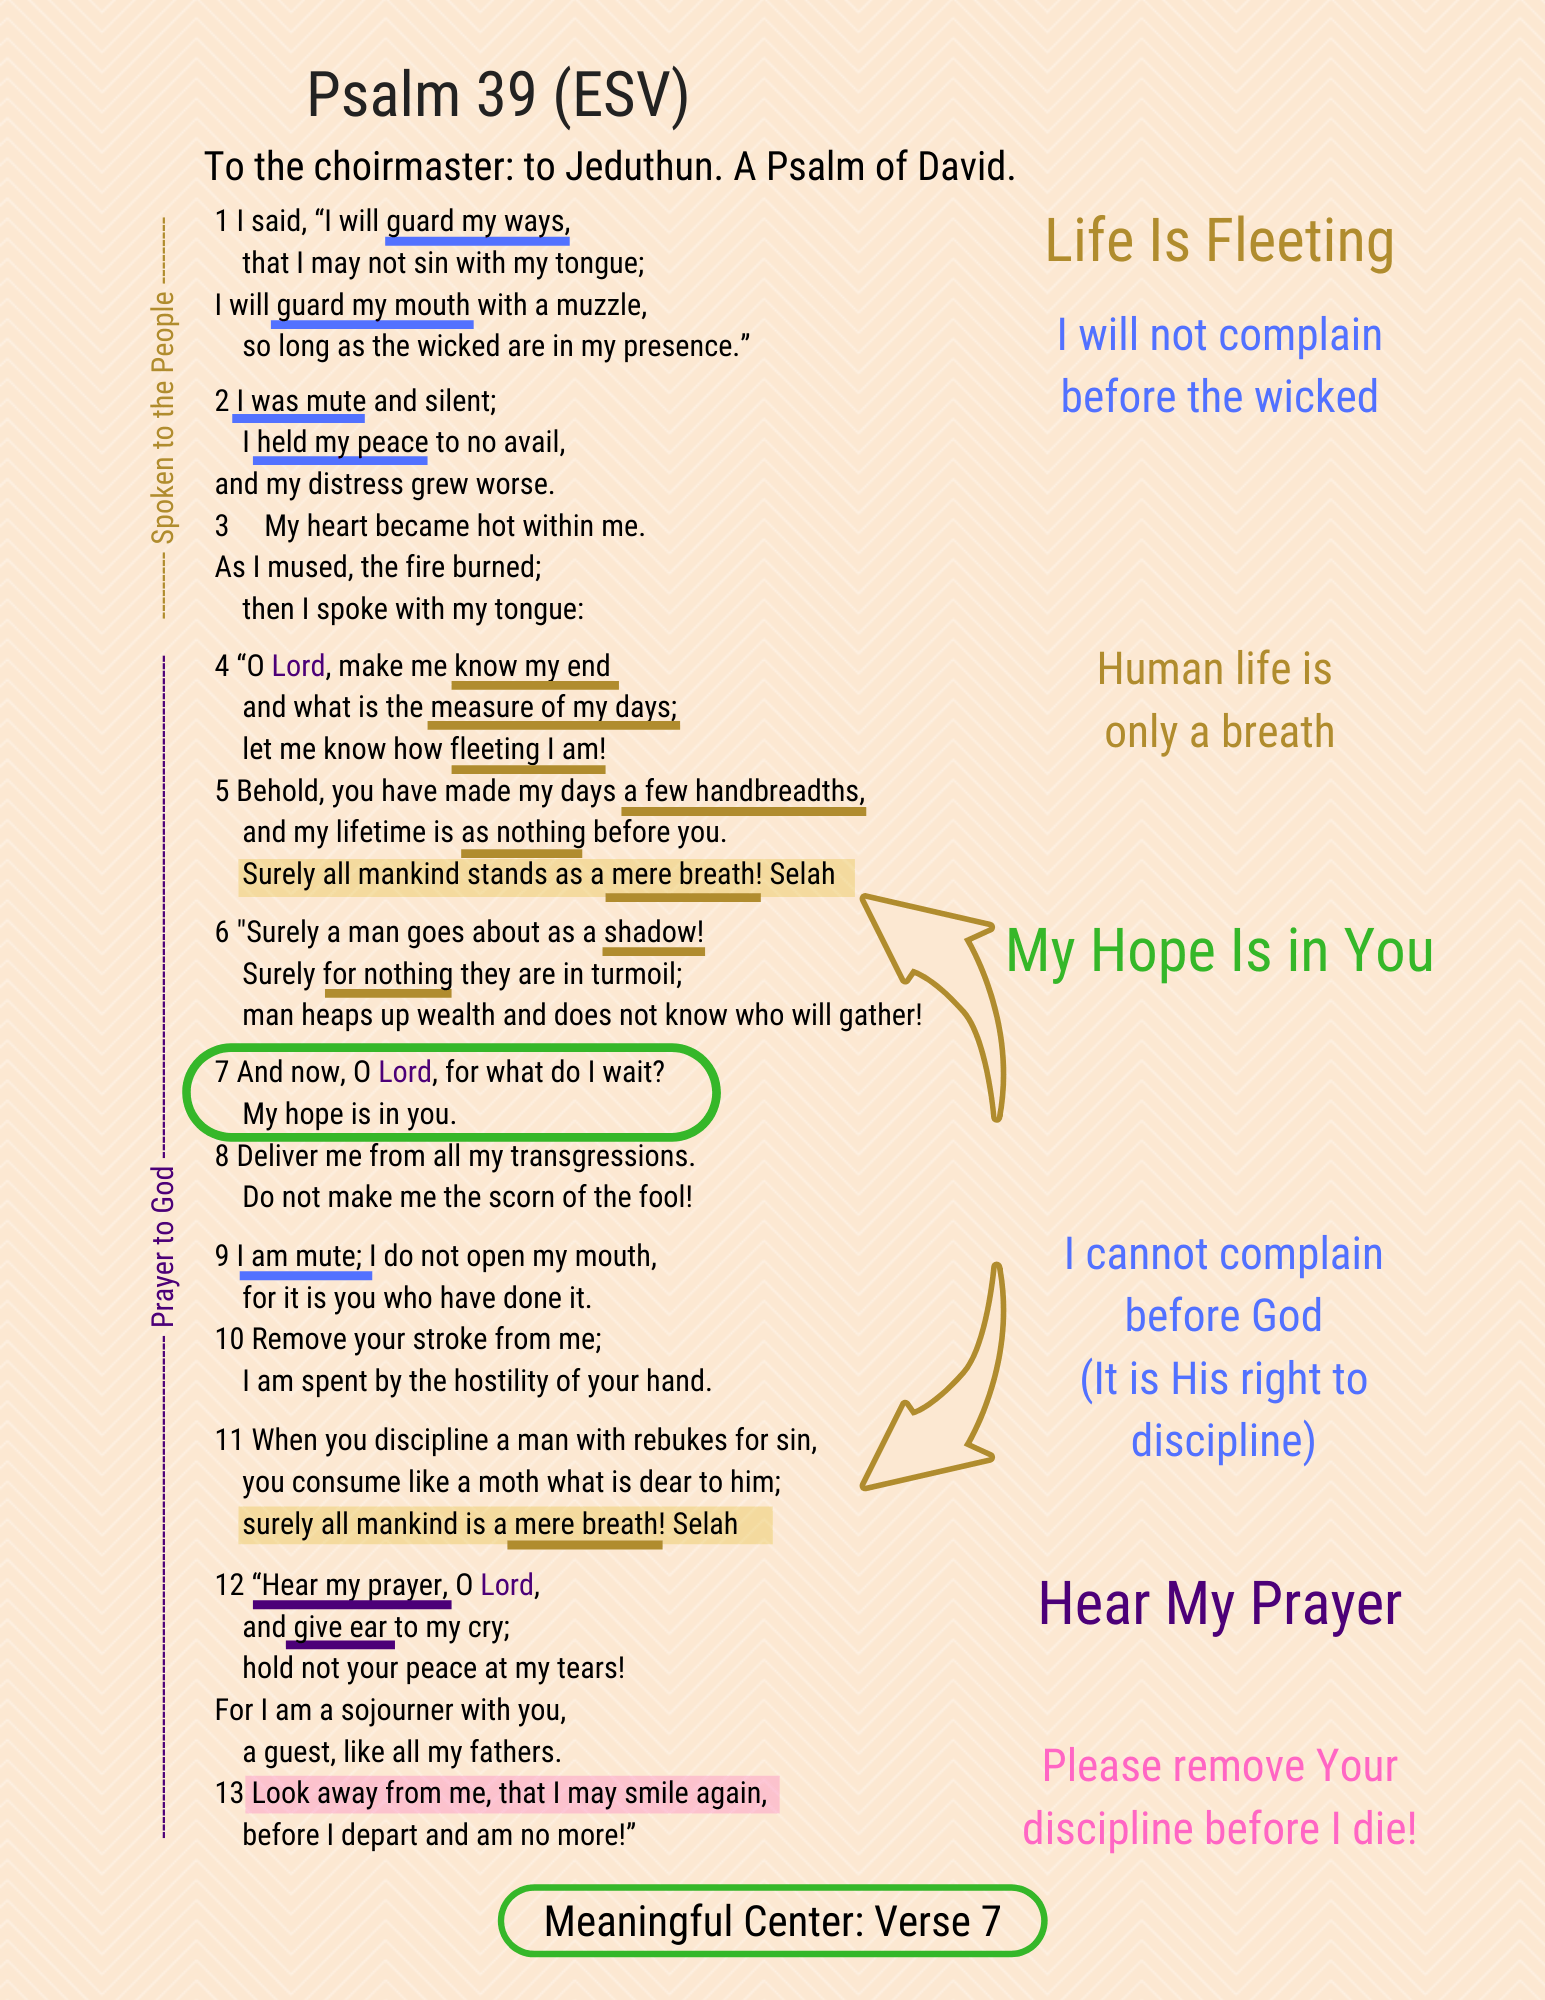 Psalm 39"